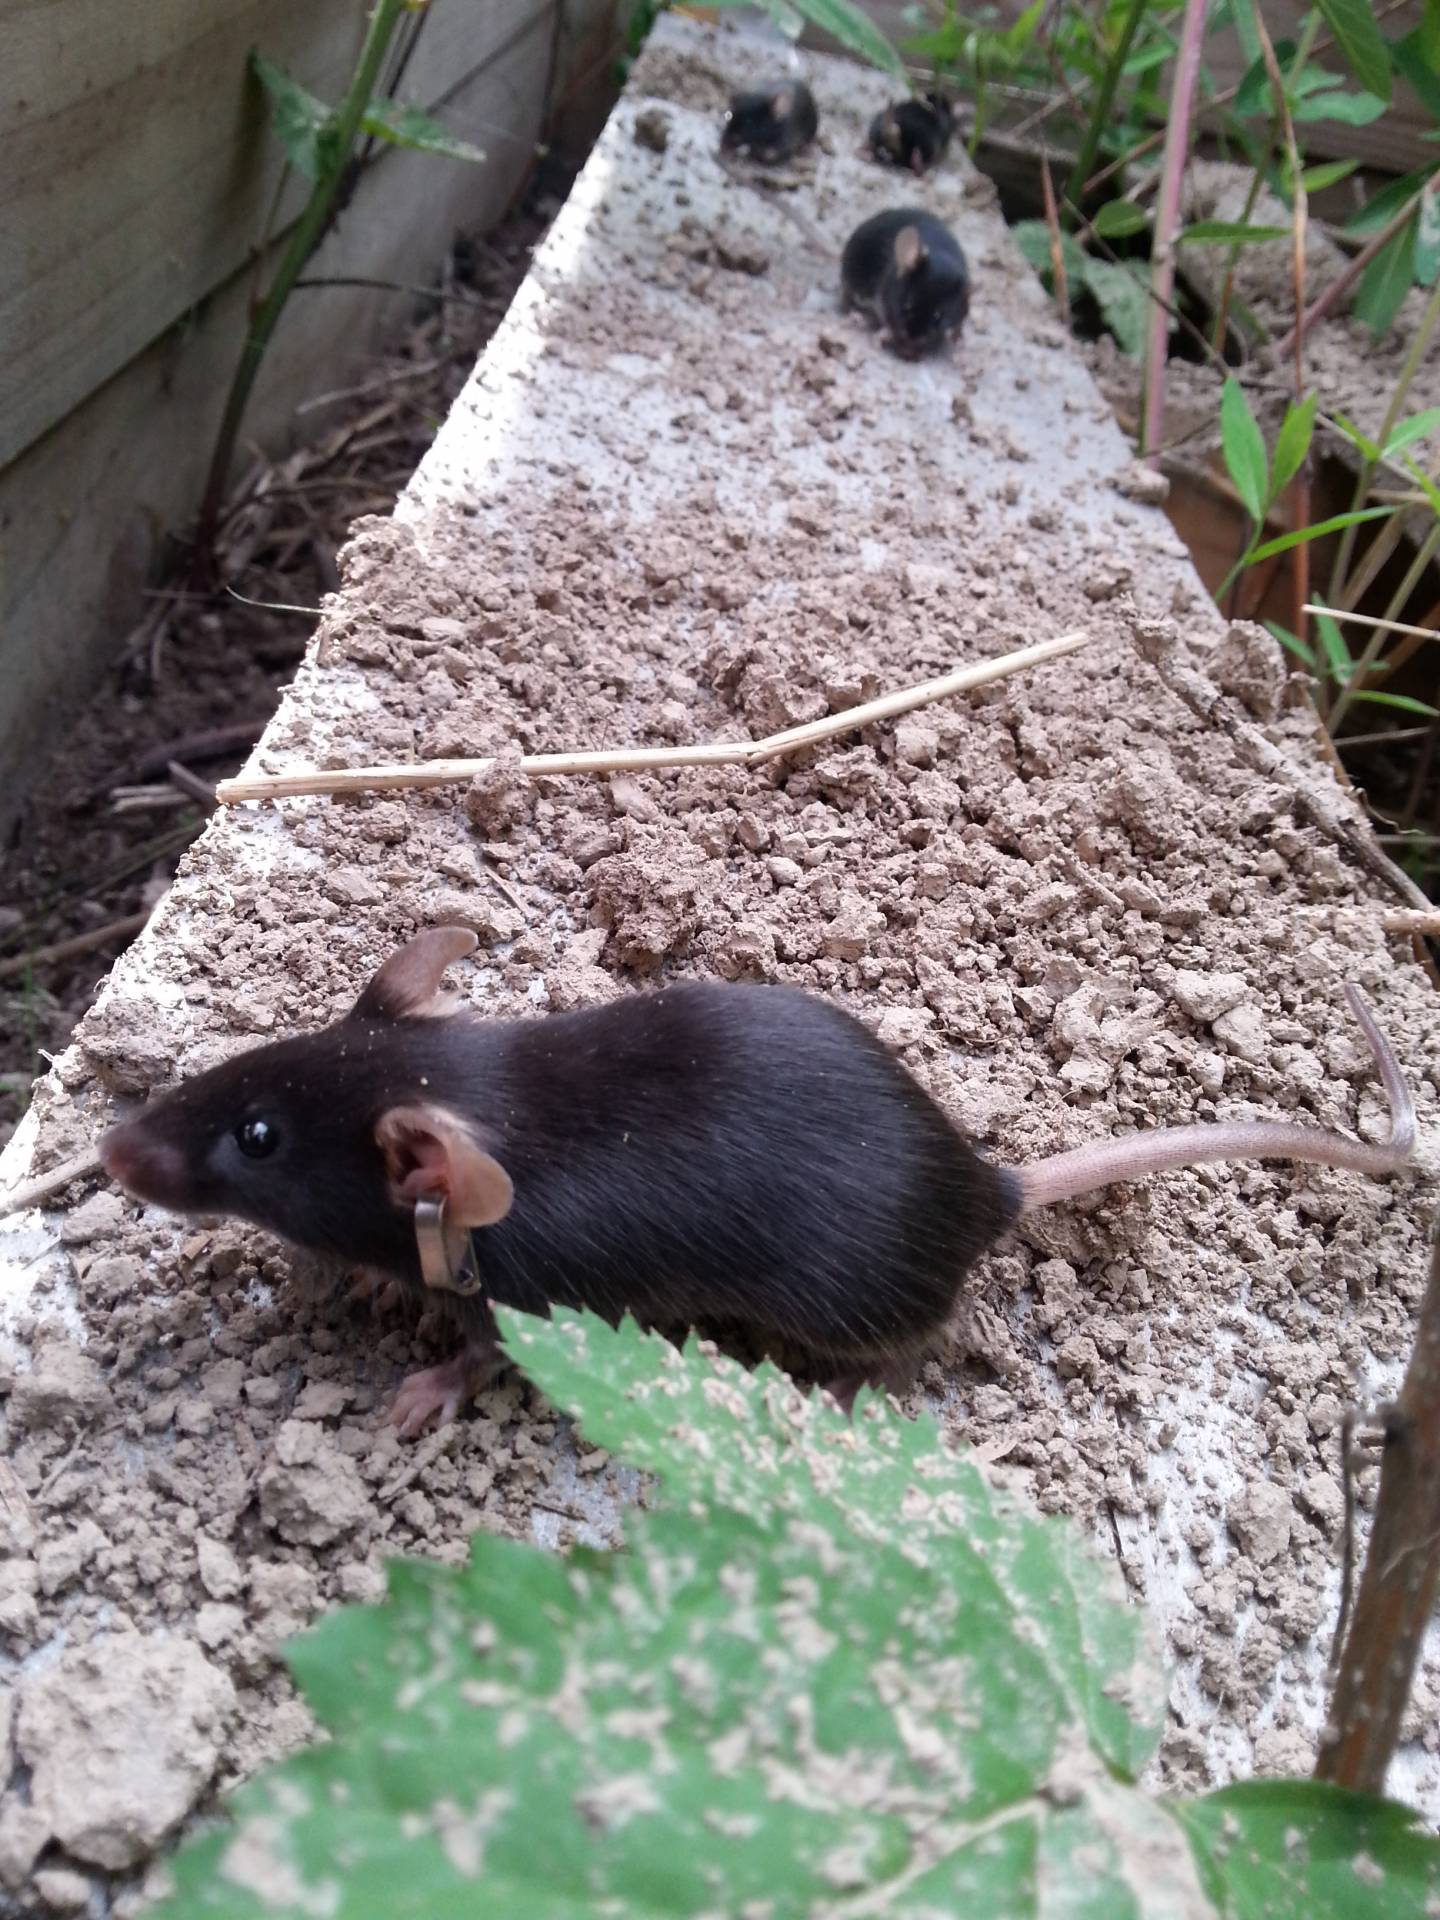 Black mouse in garden